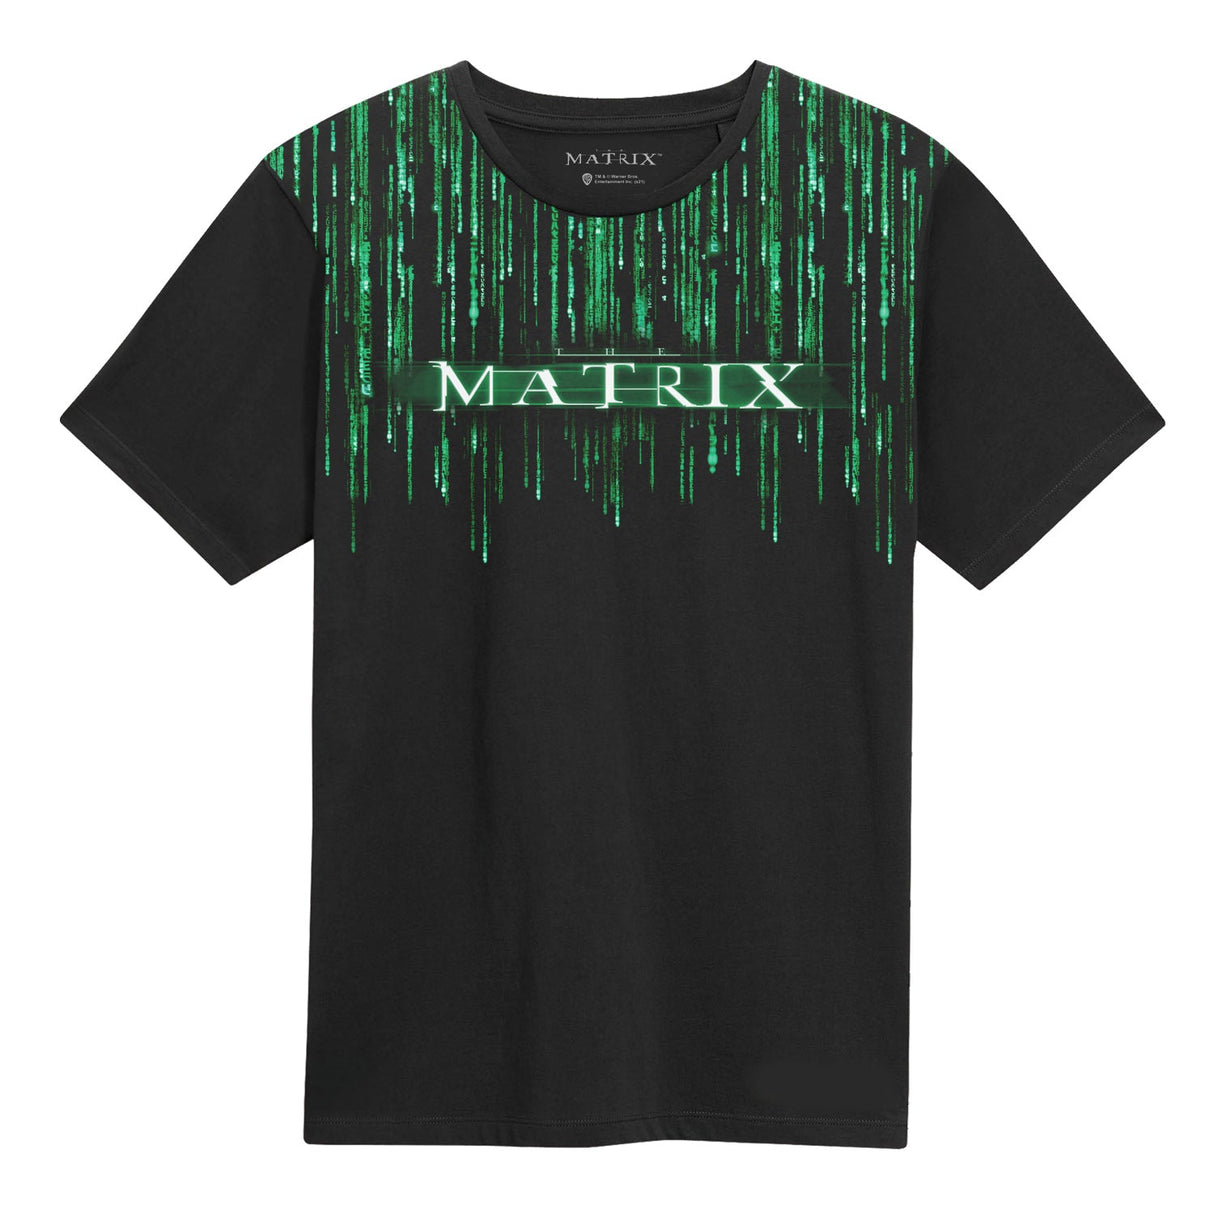 The Matrix Coding Superheroes Inc.  T-Shirt